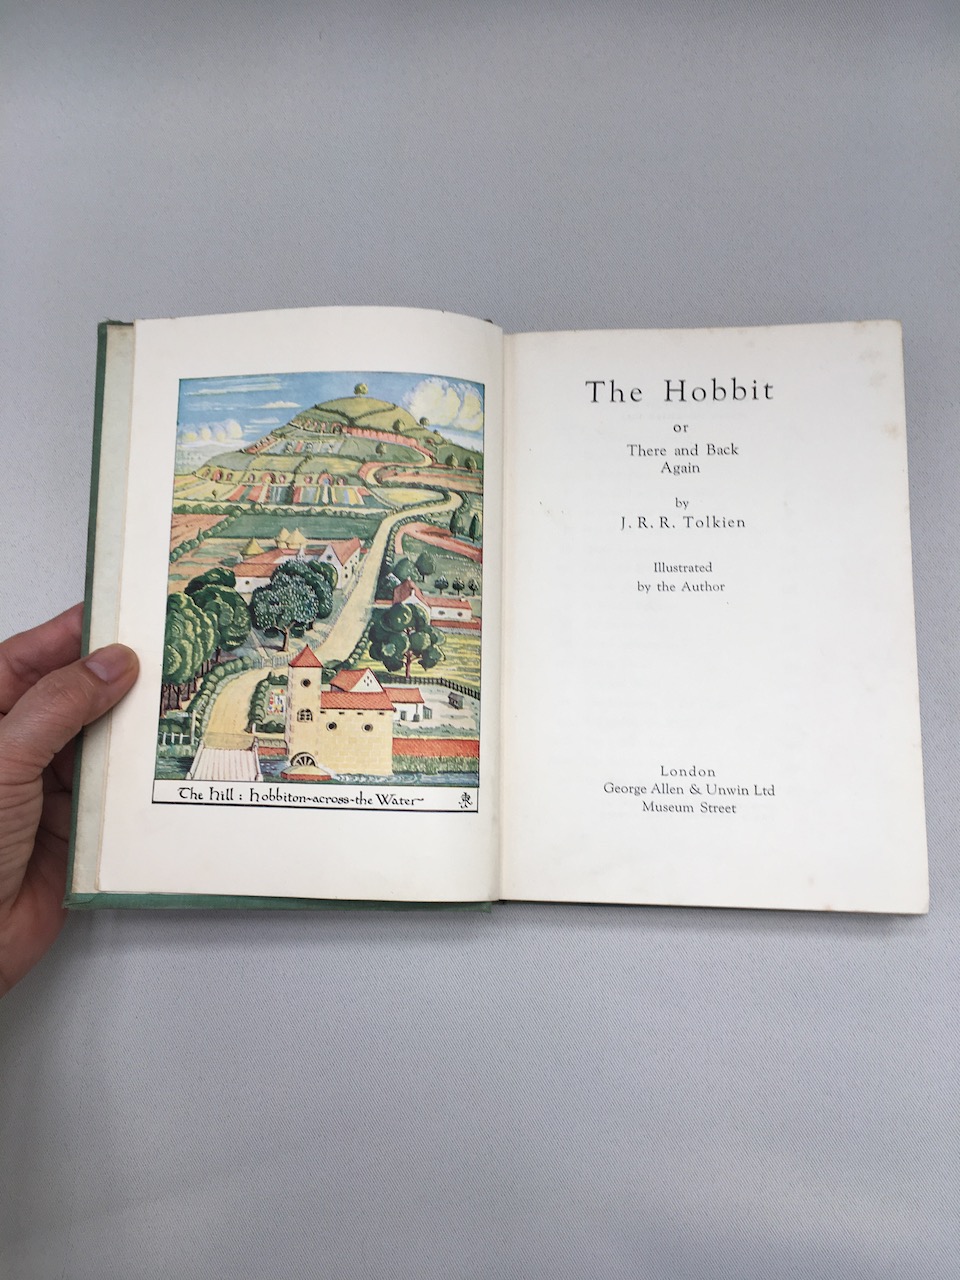 
The Hobbit, George Allen & Unwin, 1937 1st UK Edition 2nd impression 11